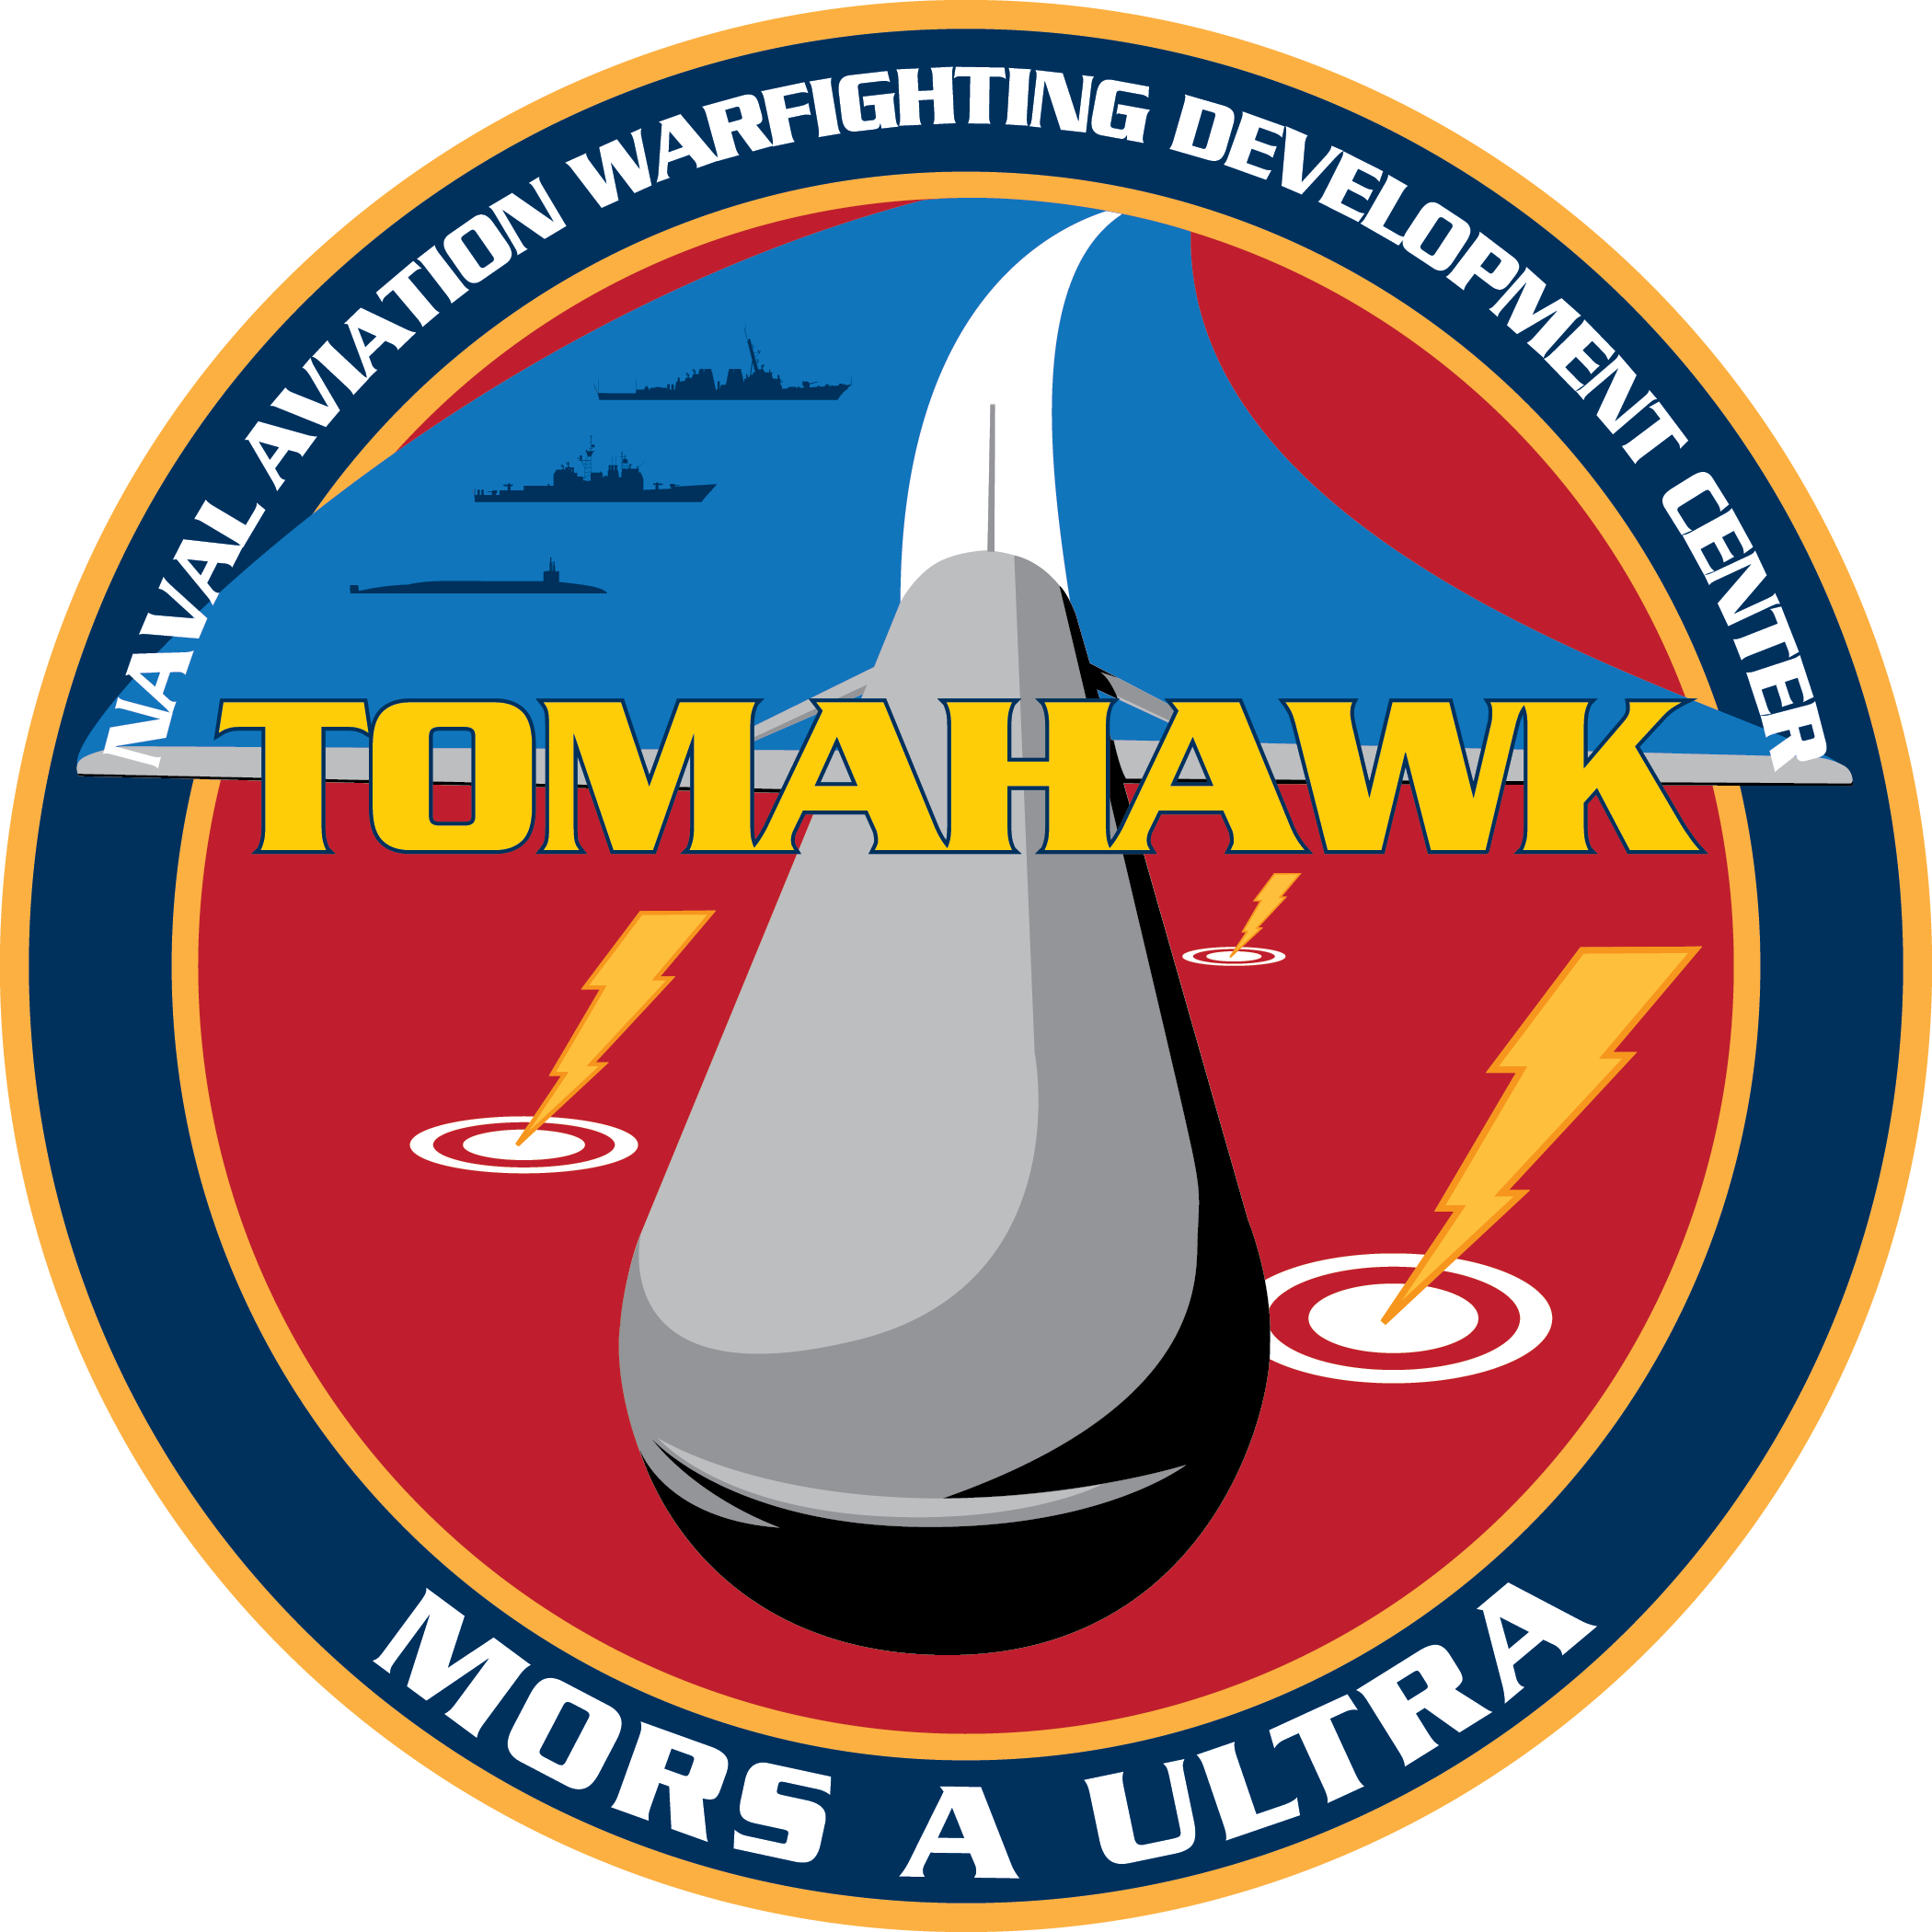 The Tomahawk Landing Attack Missile Department Provides - Naval Aviation Warfighting Development Center (2100x2100)